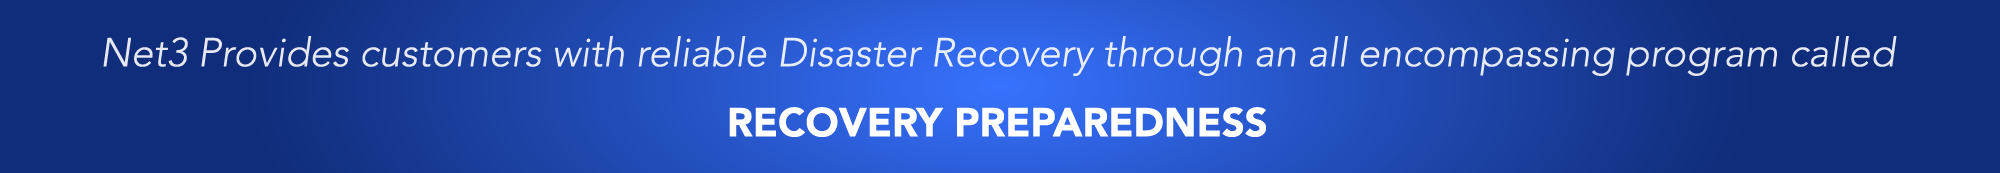 recovery preparedness blue banner 